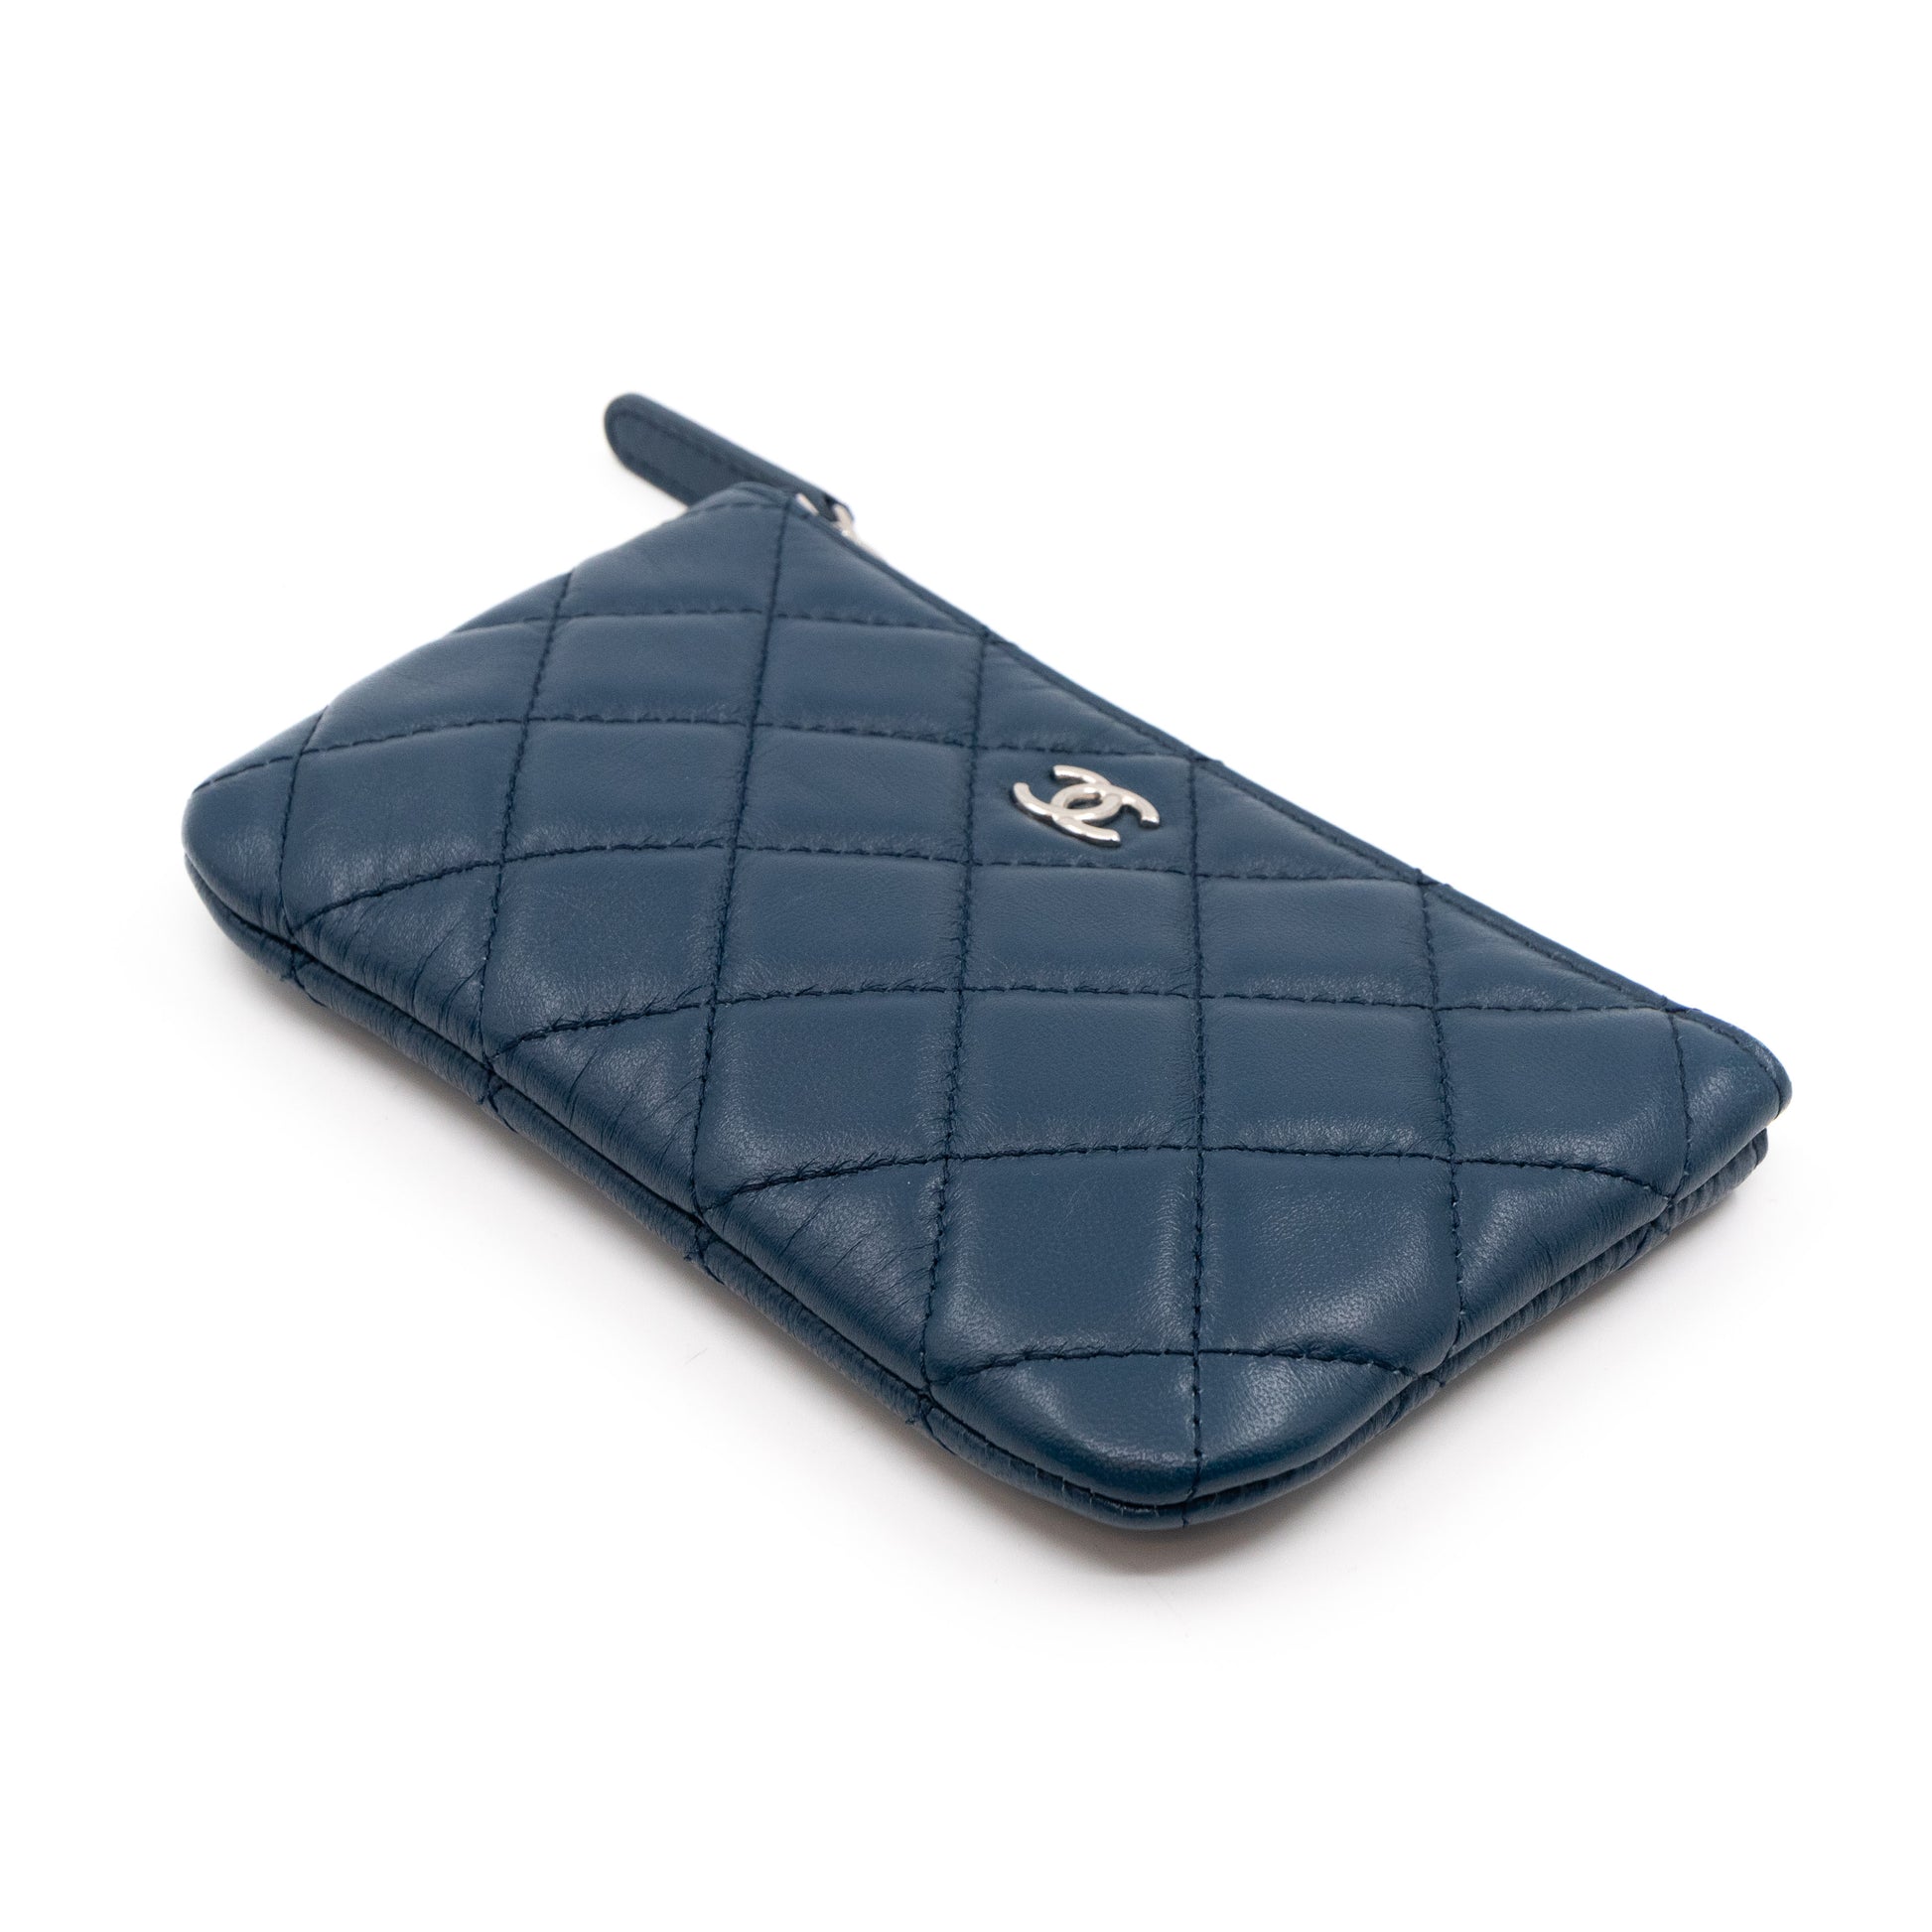 Classic Mini O Case Navy Blue Leather